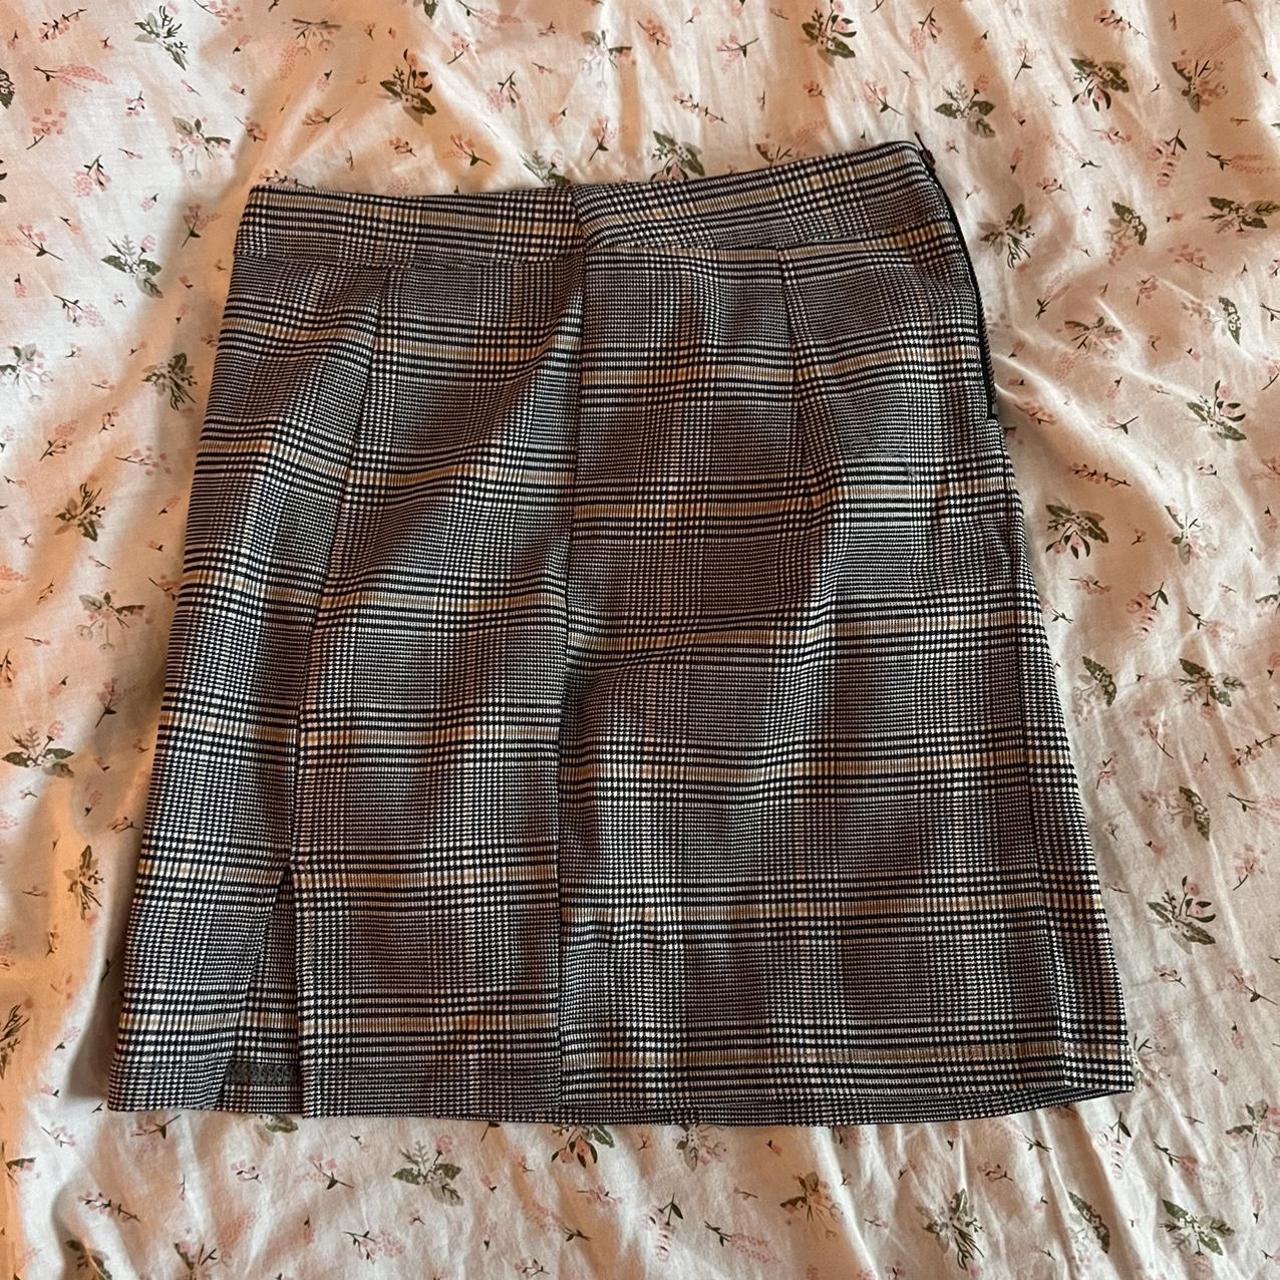 Product Image 1 - Plaid garage school girl skirt